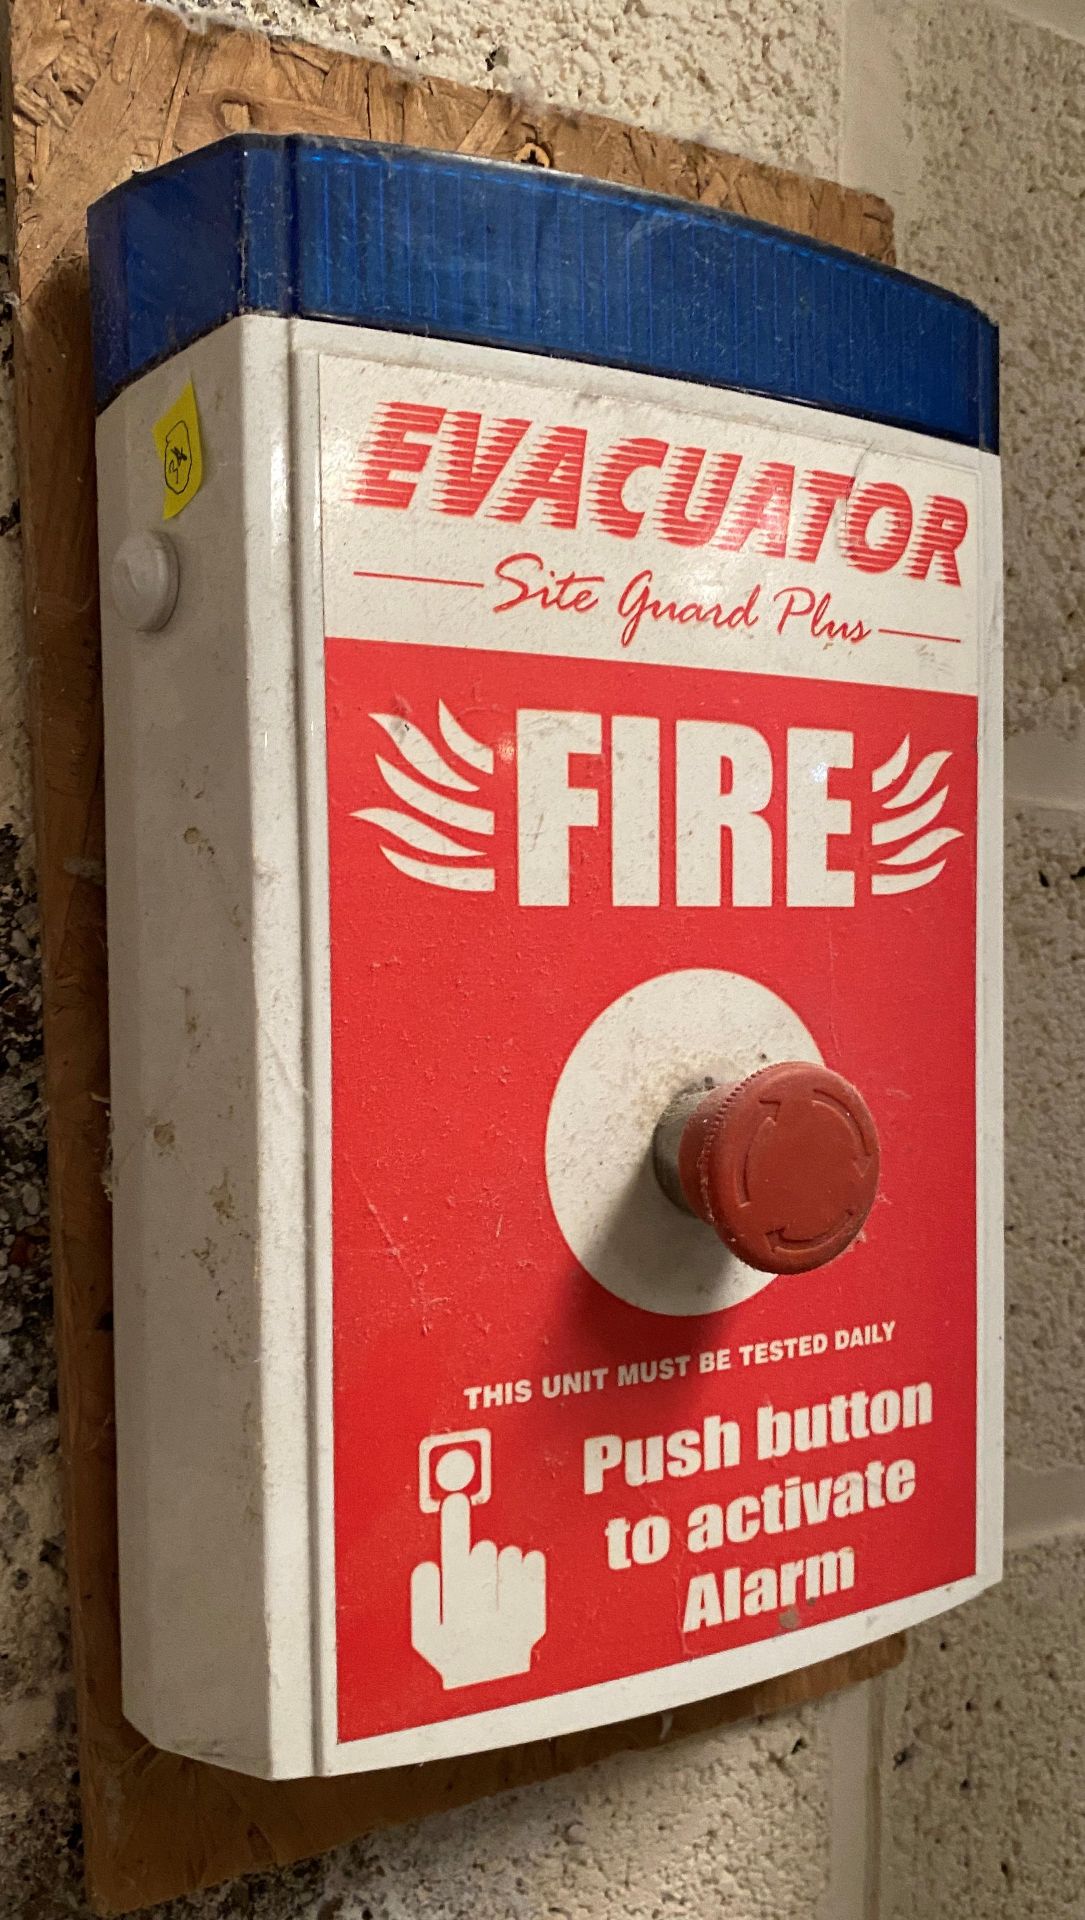 2 x Evacuator Site Guard Plus Portable Fire Alarm Units - Image 2 of 2